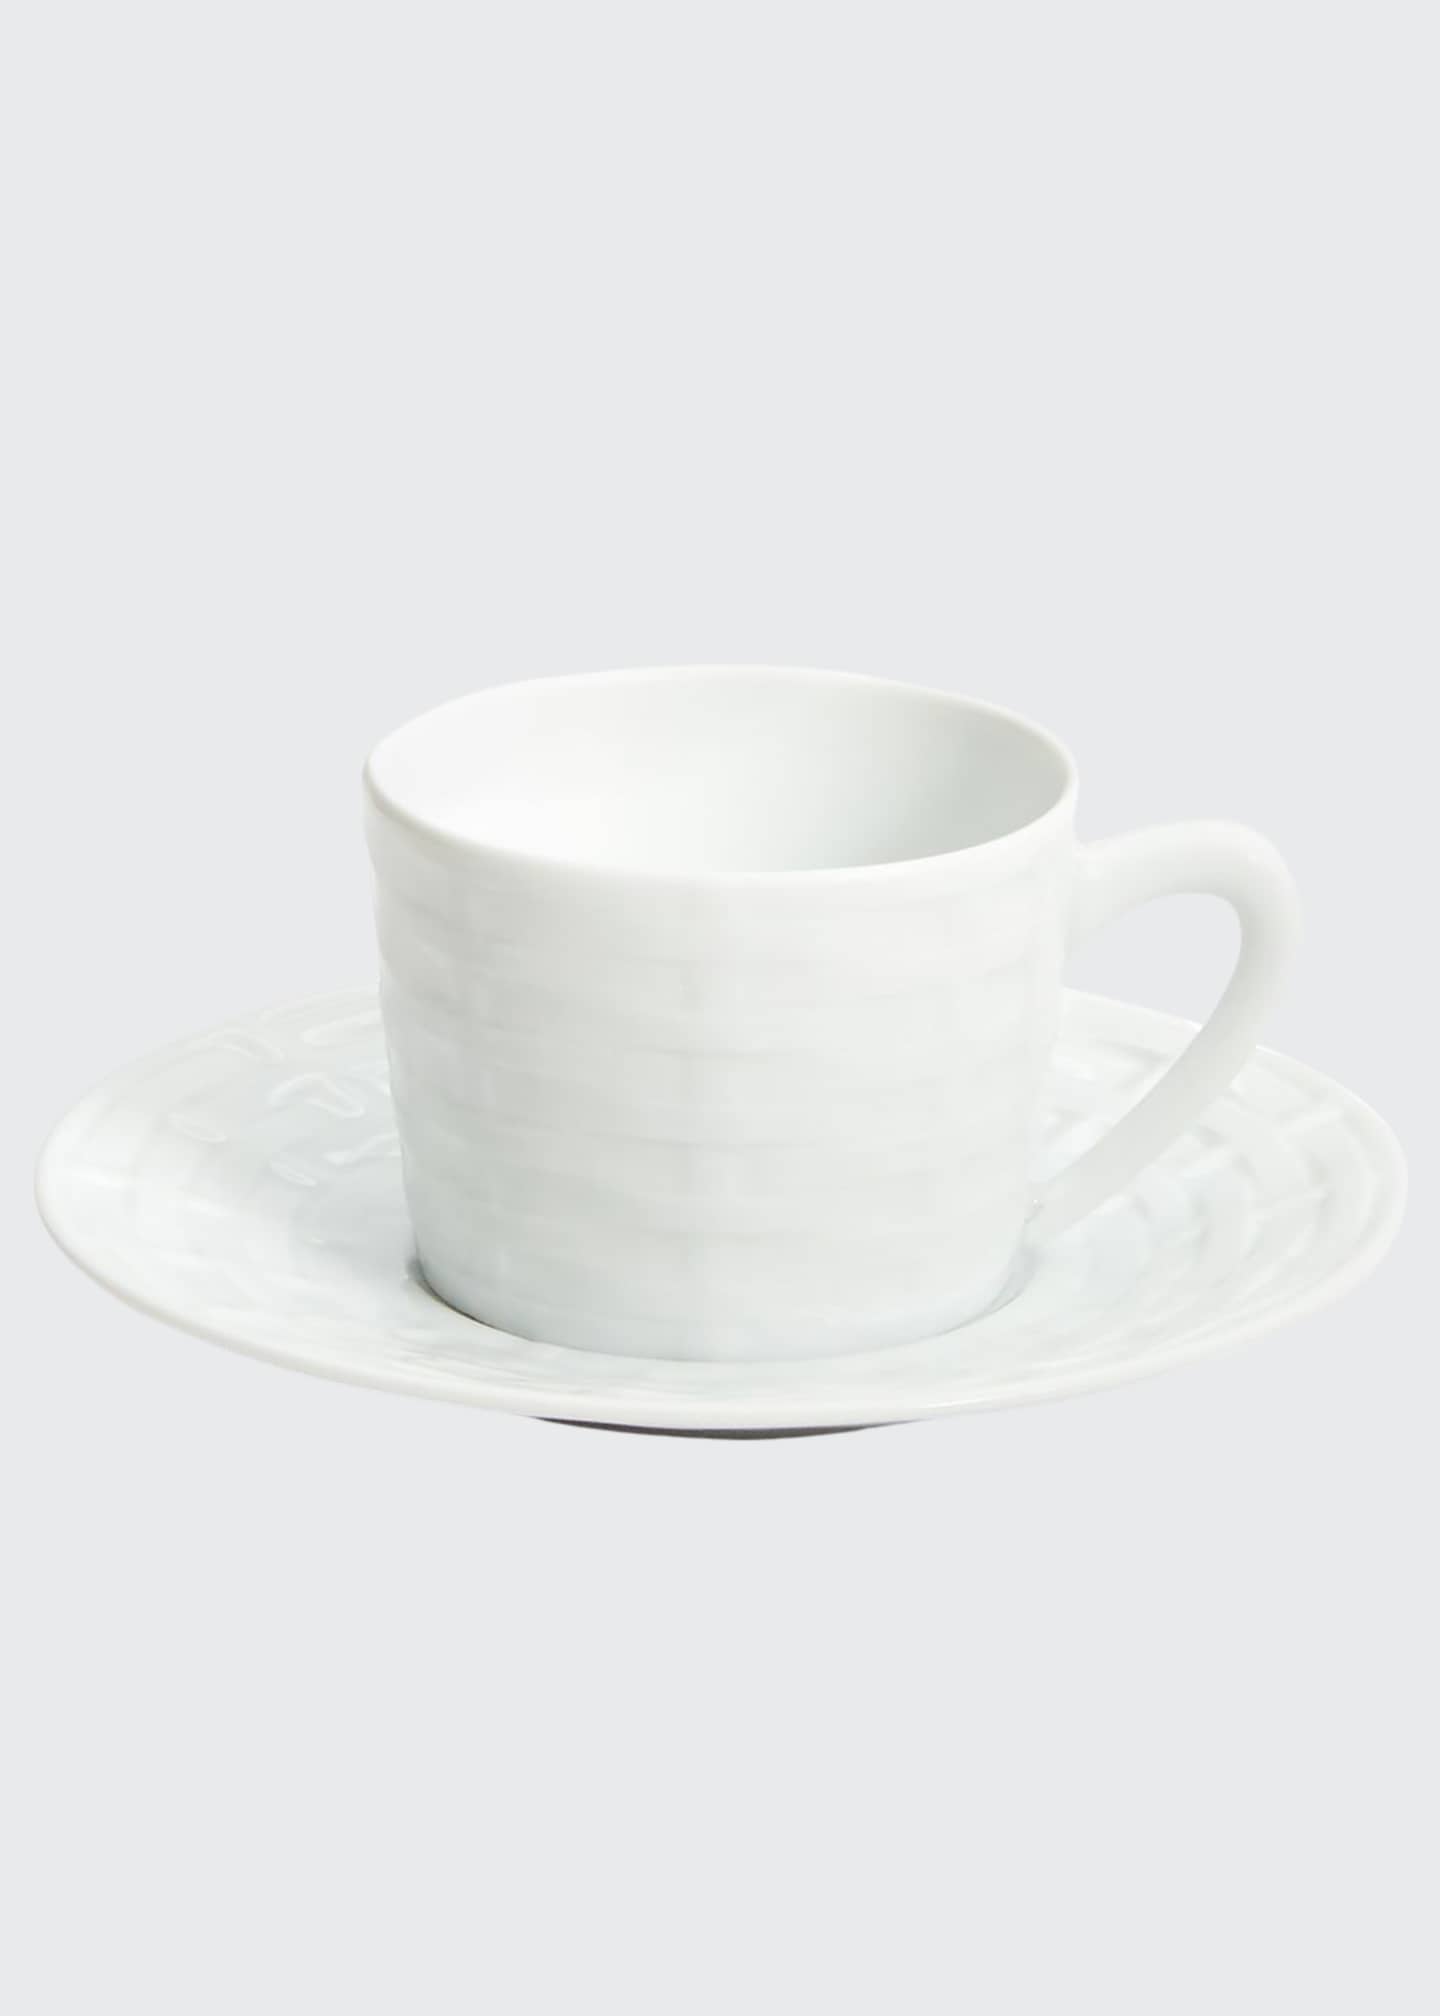 Ralph Lauren Home Belcourt Tea Cup and Saucer - Bergdorf Goodman